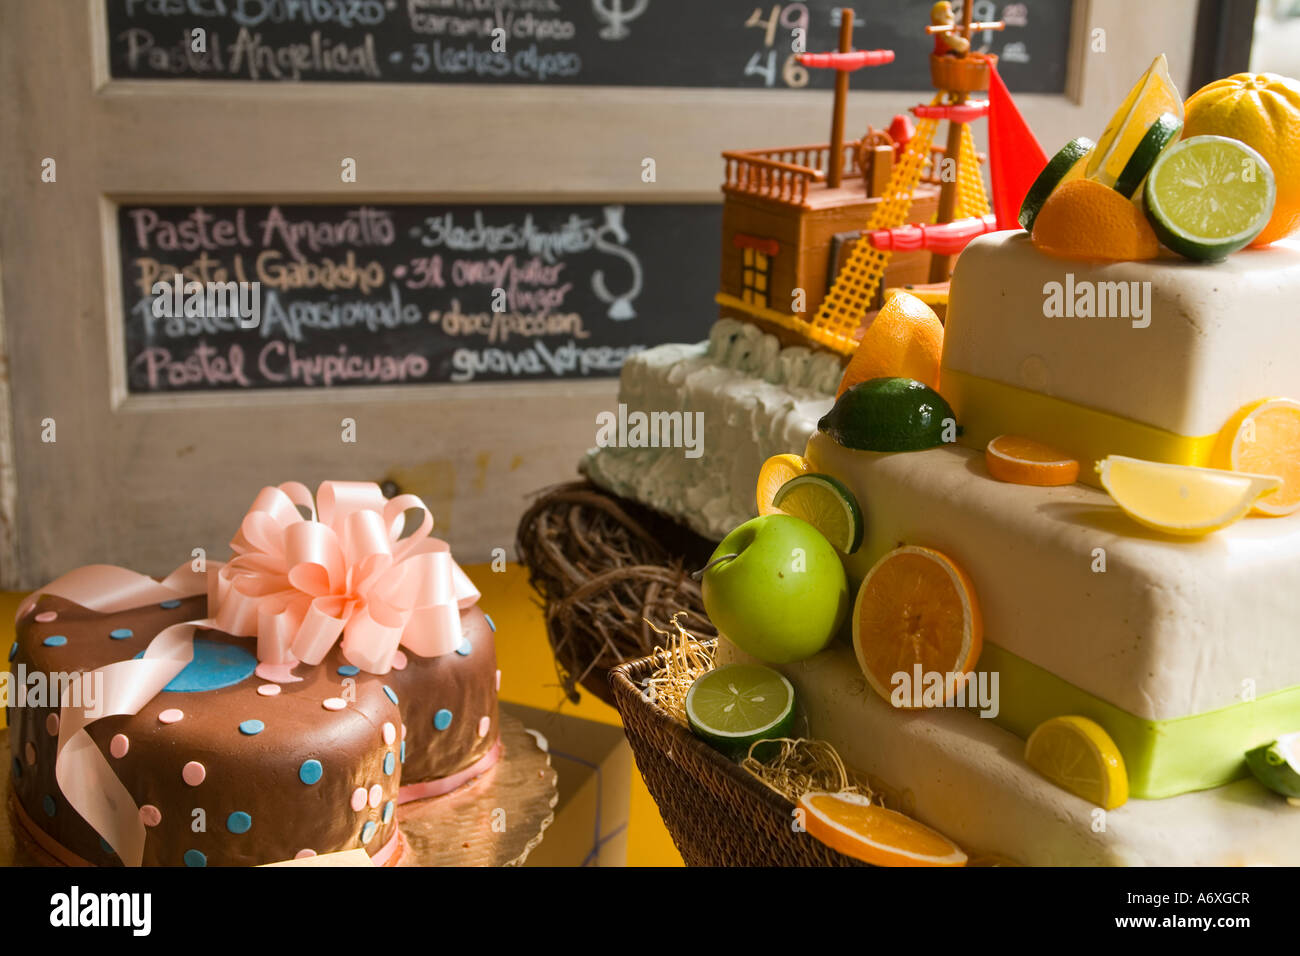 ILLINOIS Chicago Decorated cakes in bakery store window in Pilsen neighborhood prices on chalkboard Stock Photo